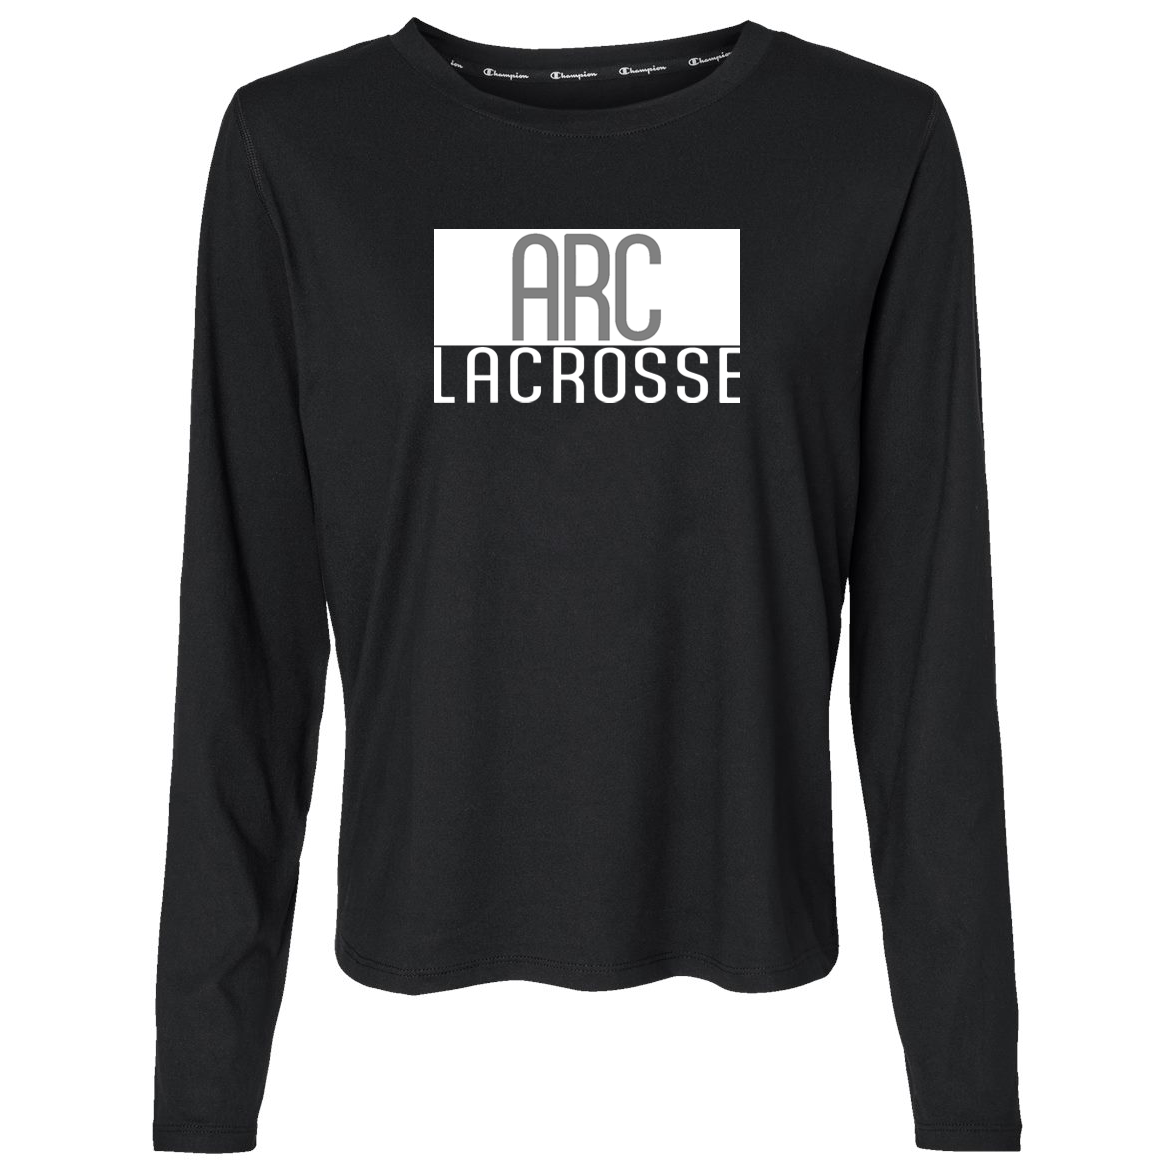 Arc Lacrosse Club Champion Women's Soft Touch Long Sleeve